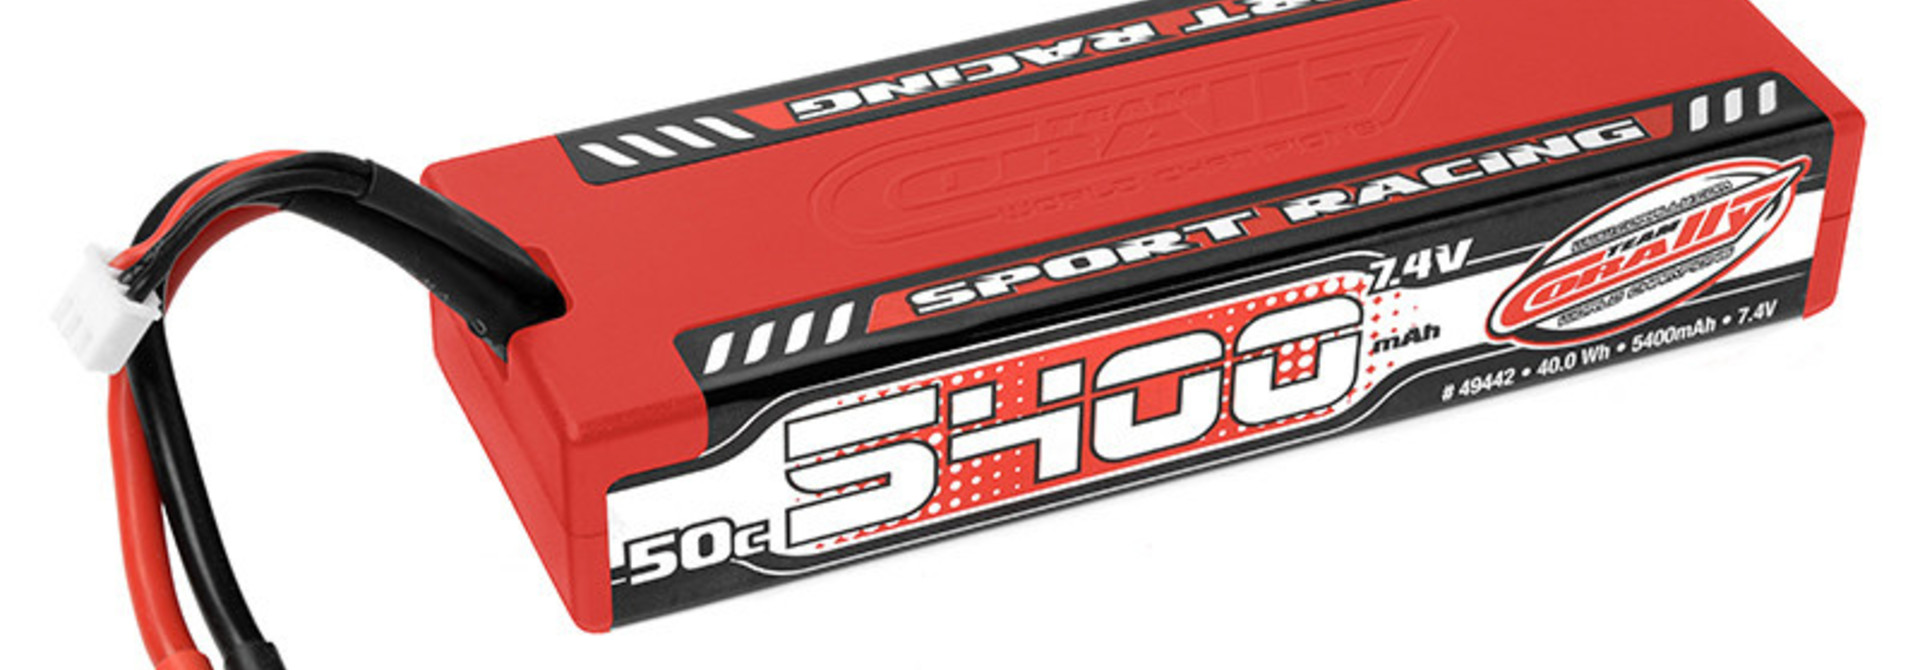 Team Corally - Sport Racing 50C LiPo Battery - 5400mAh - 7.4V - Stick 2S - Hard Wire - T-Plug